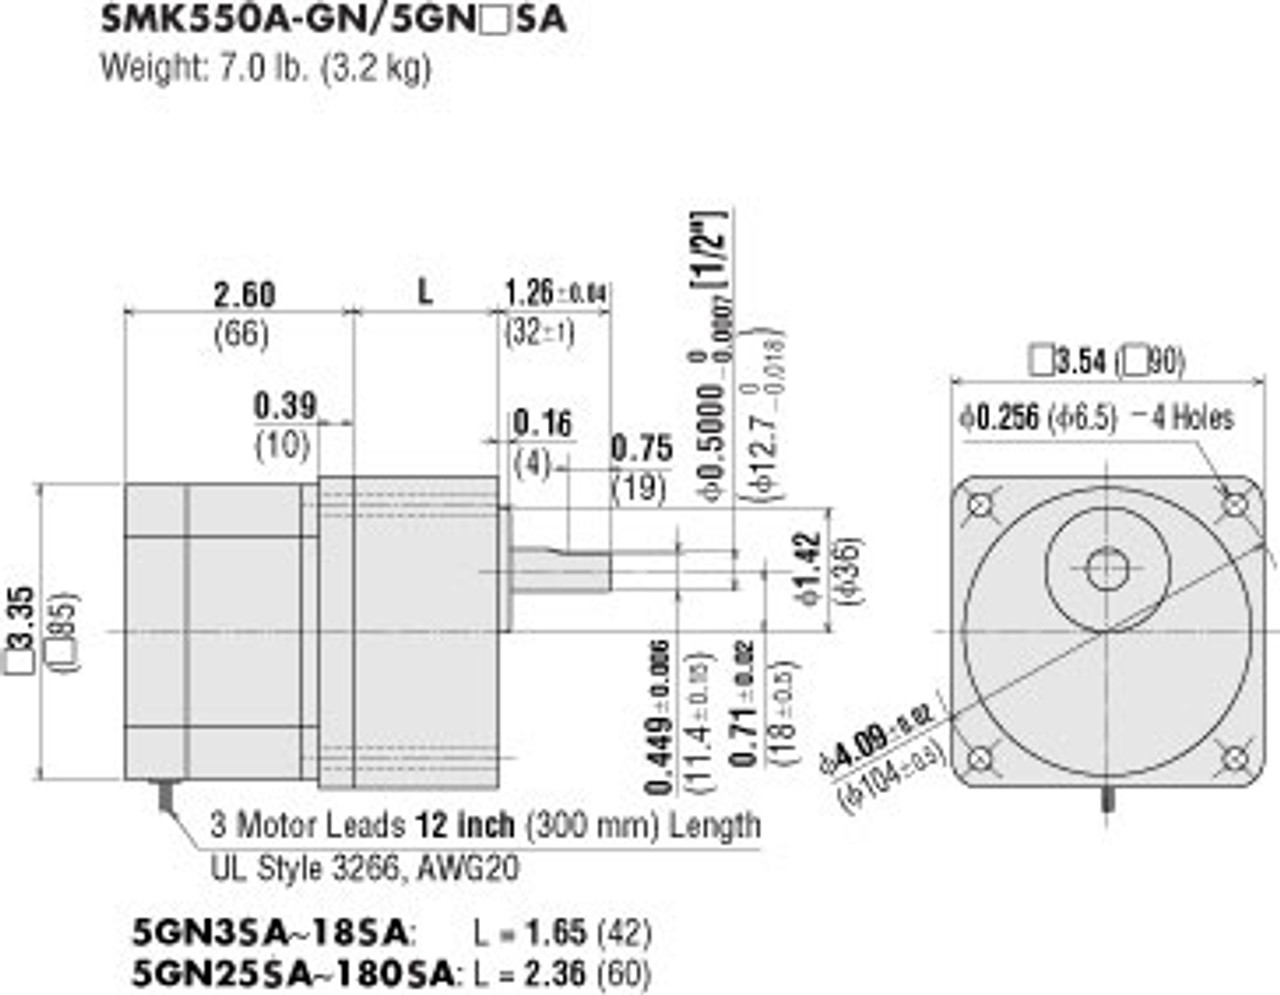 SMK550A-GN / 5GN18SA - Dimensions